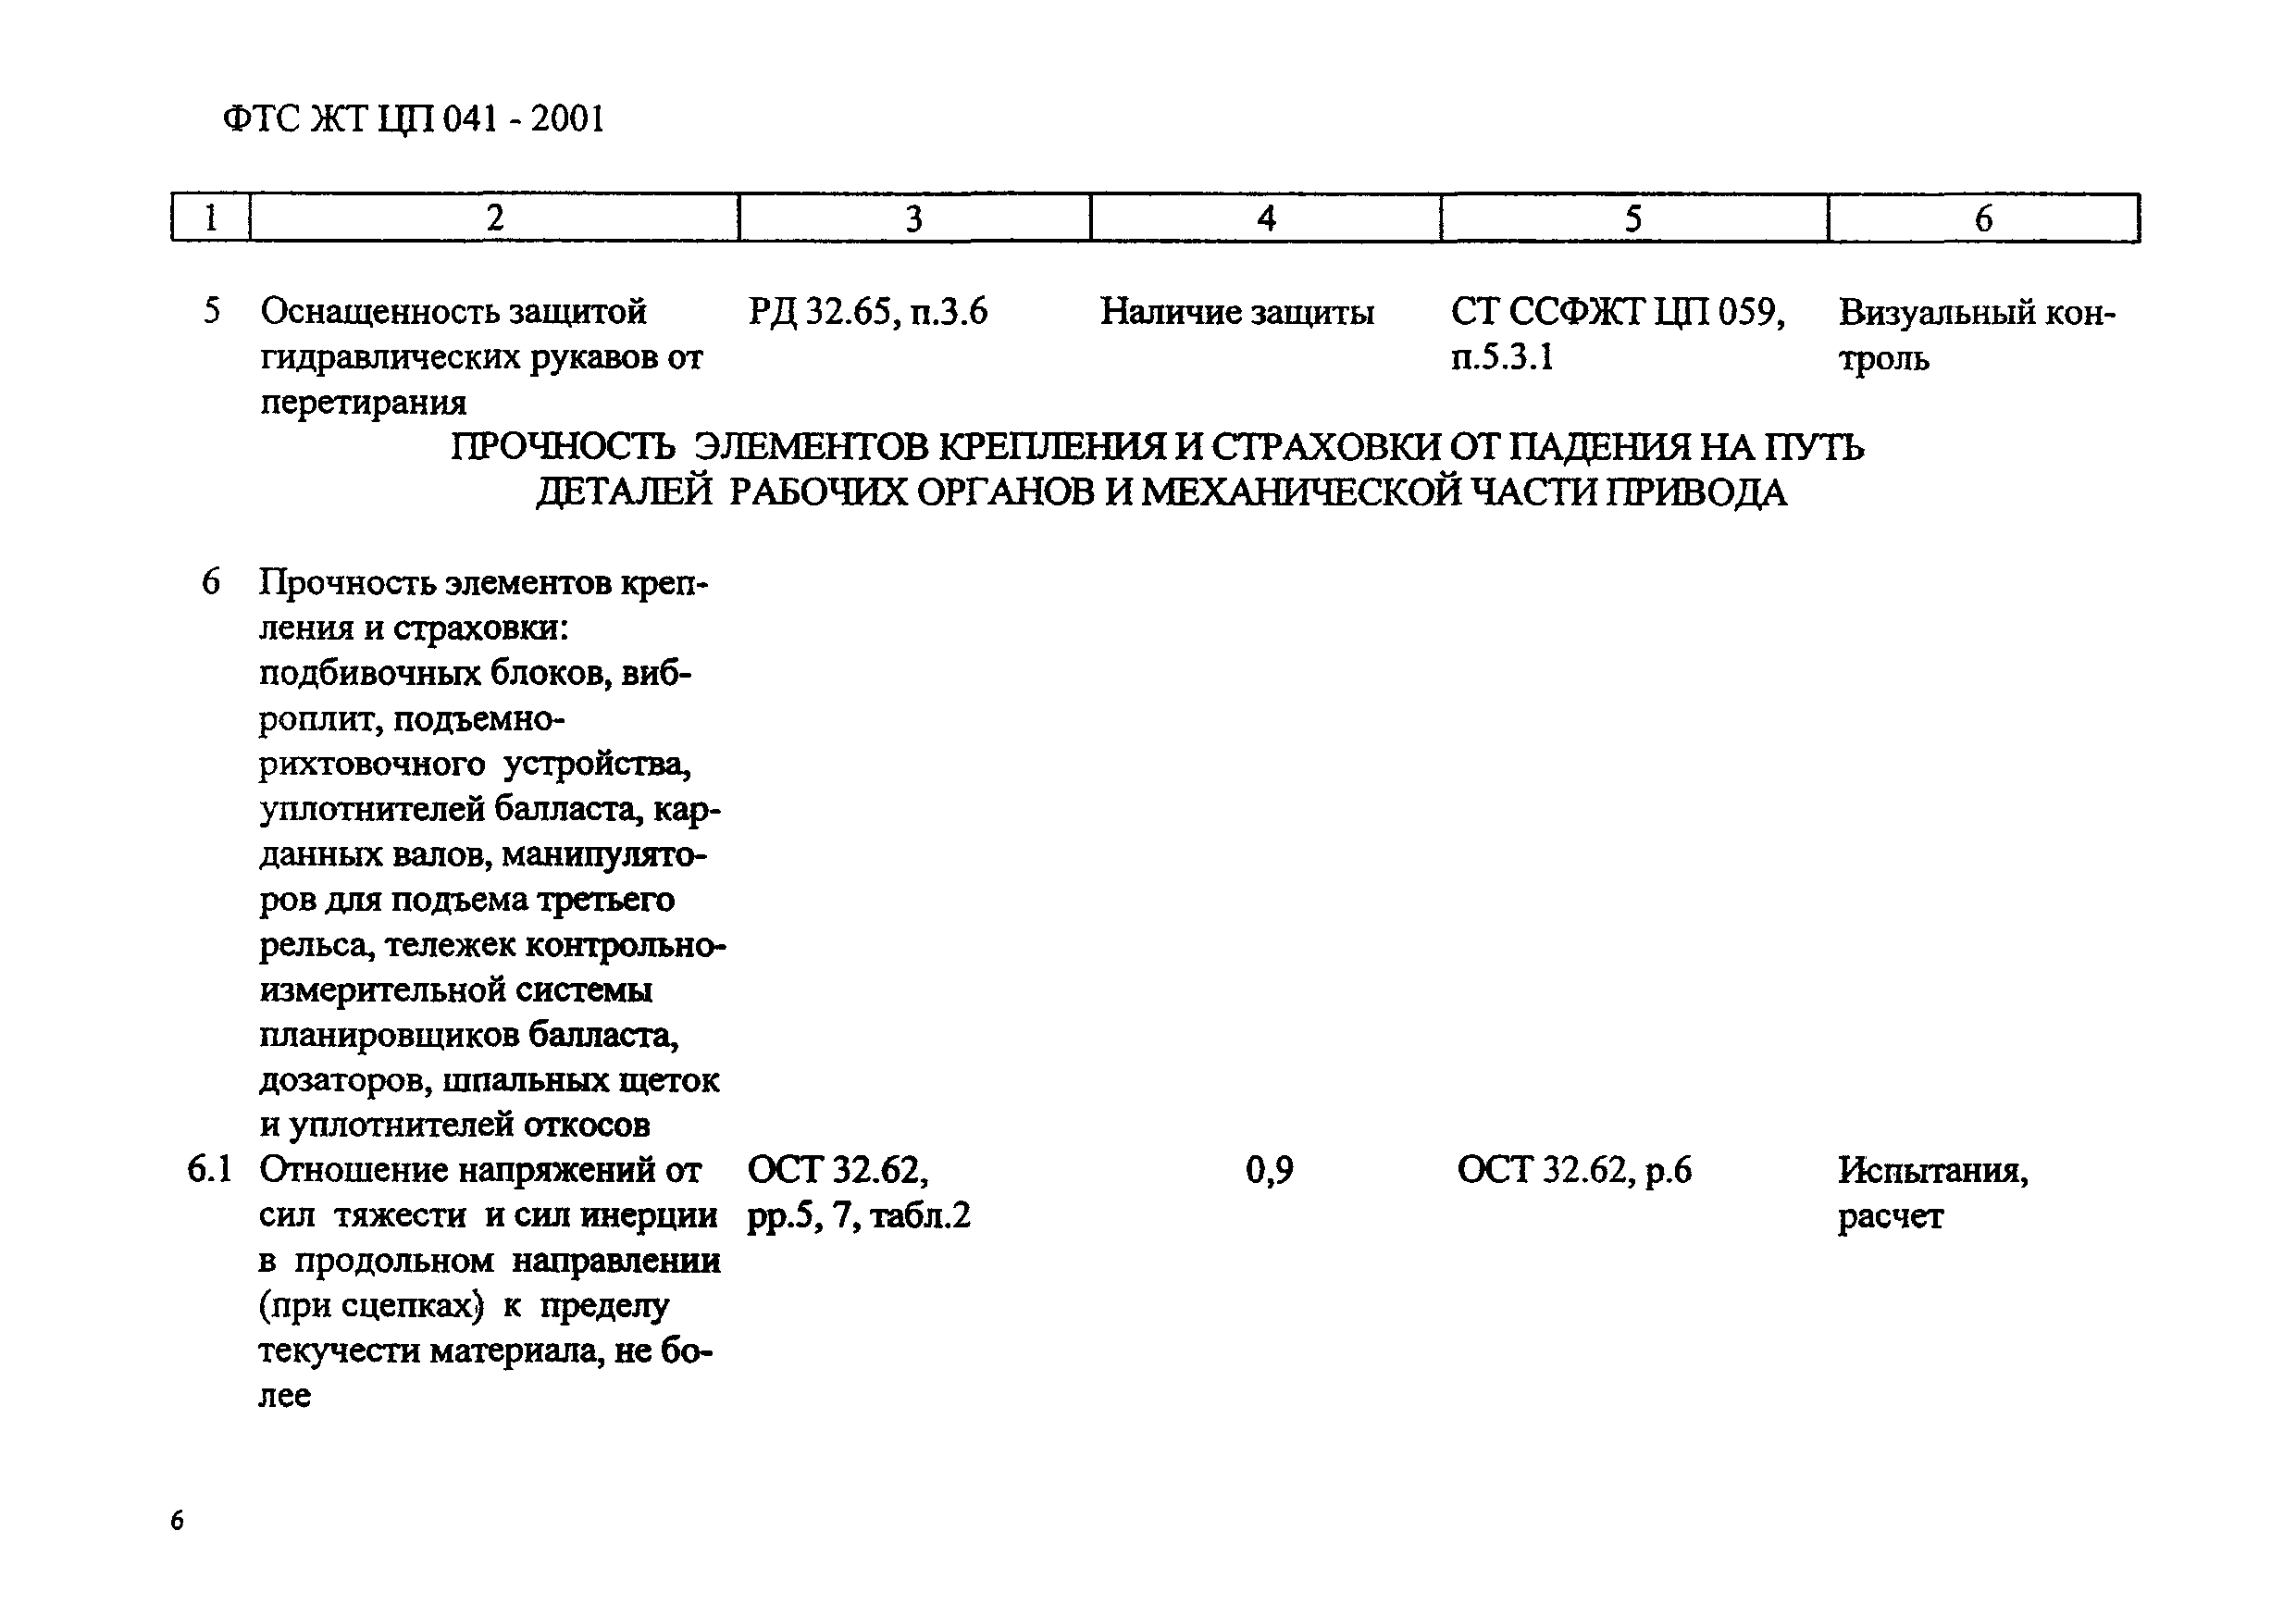 ФТС ЖТ ЦП 041-2001